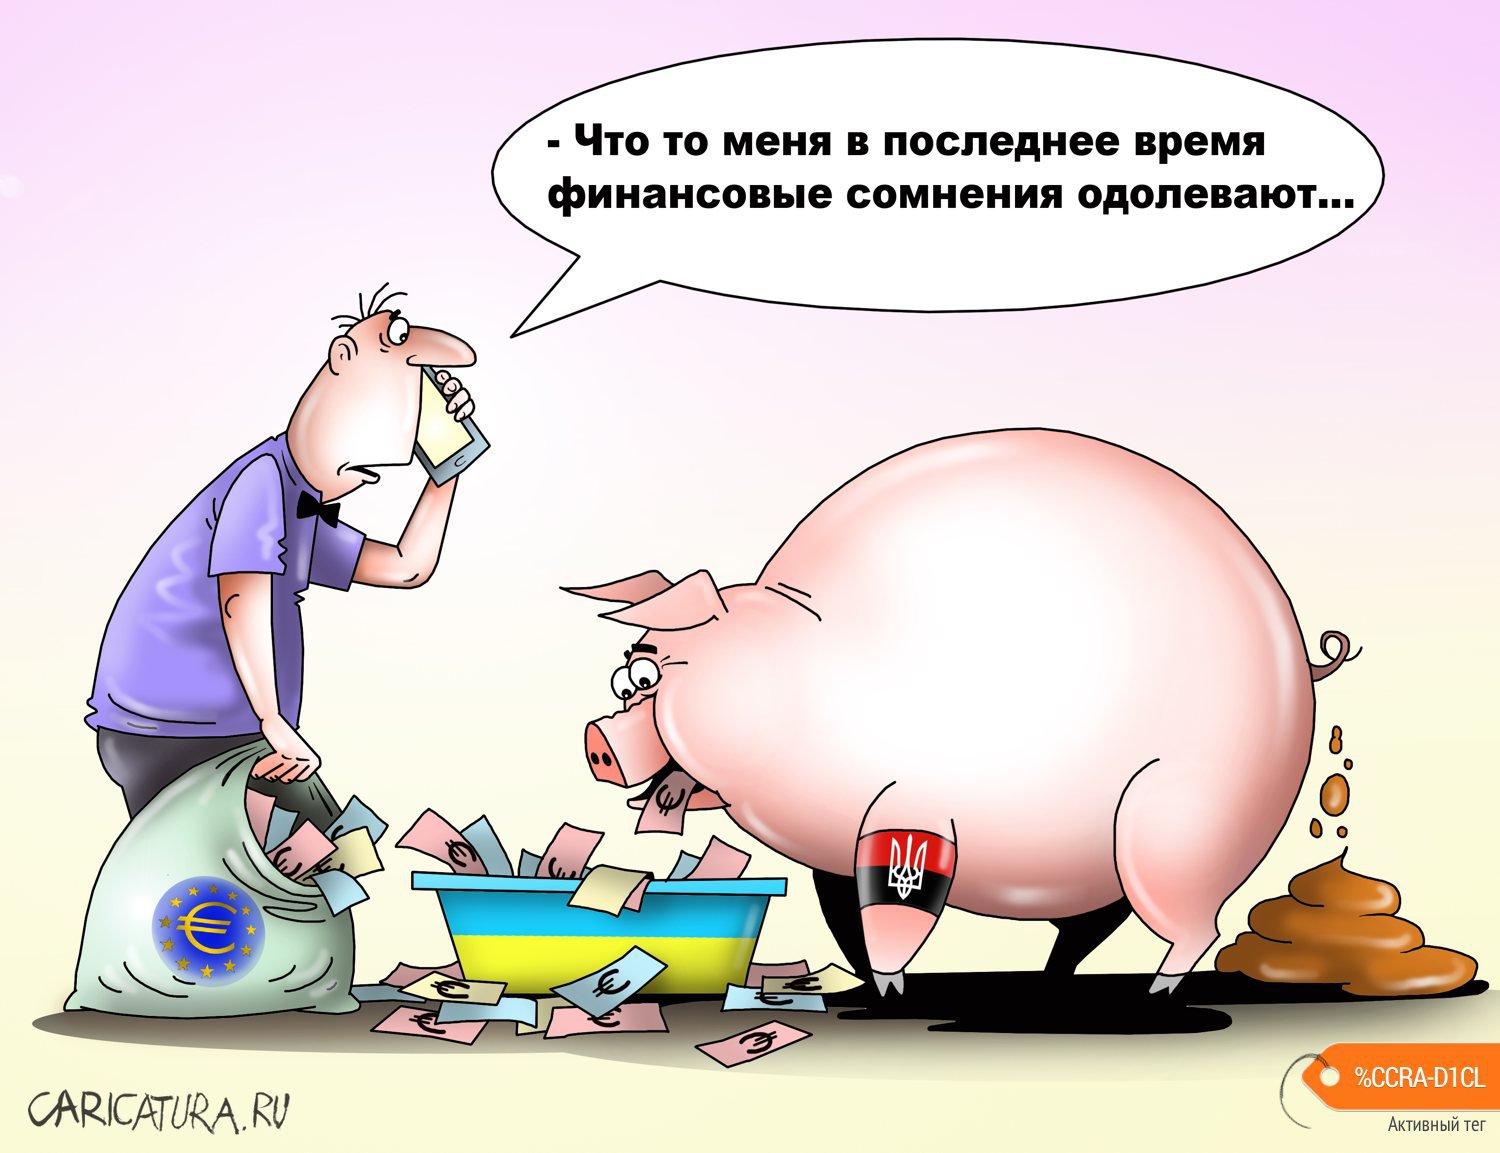 Карикатура "Финансовые сомнения", Сергей Корсун